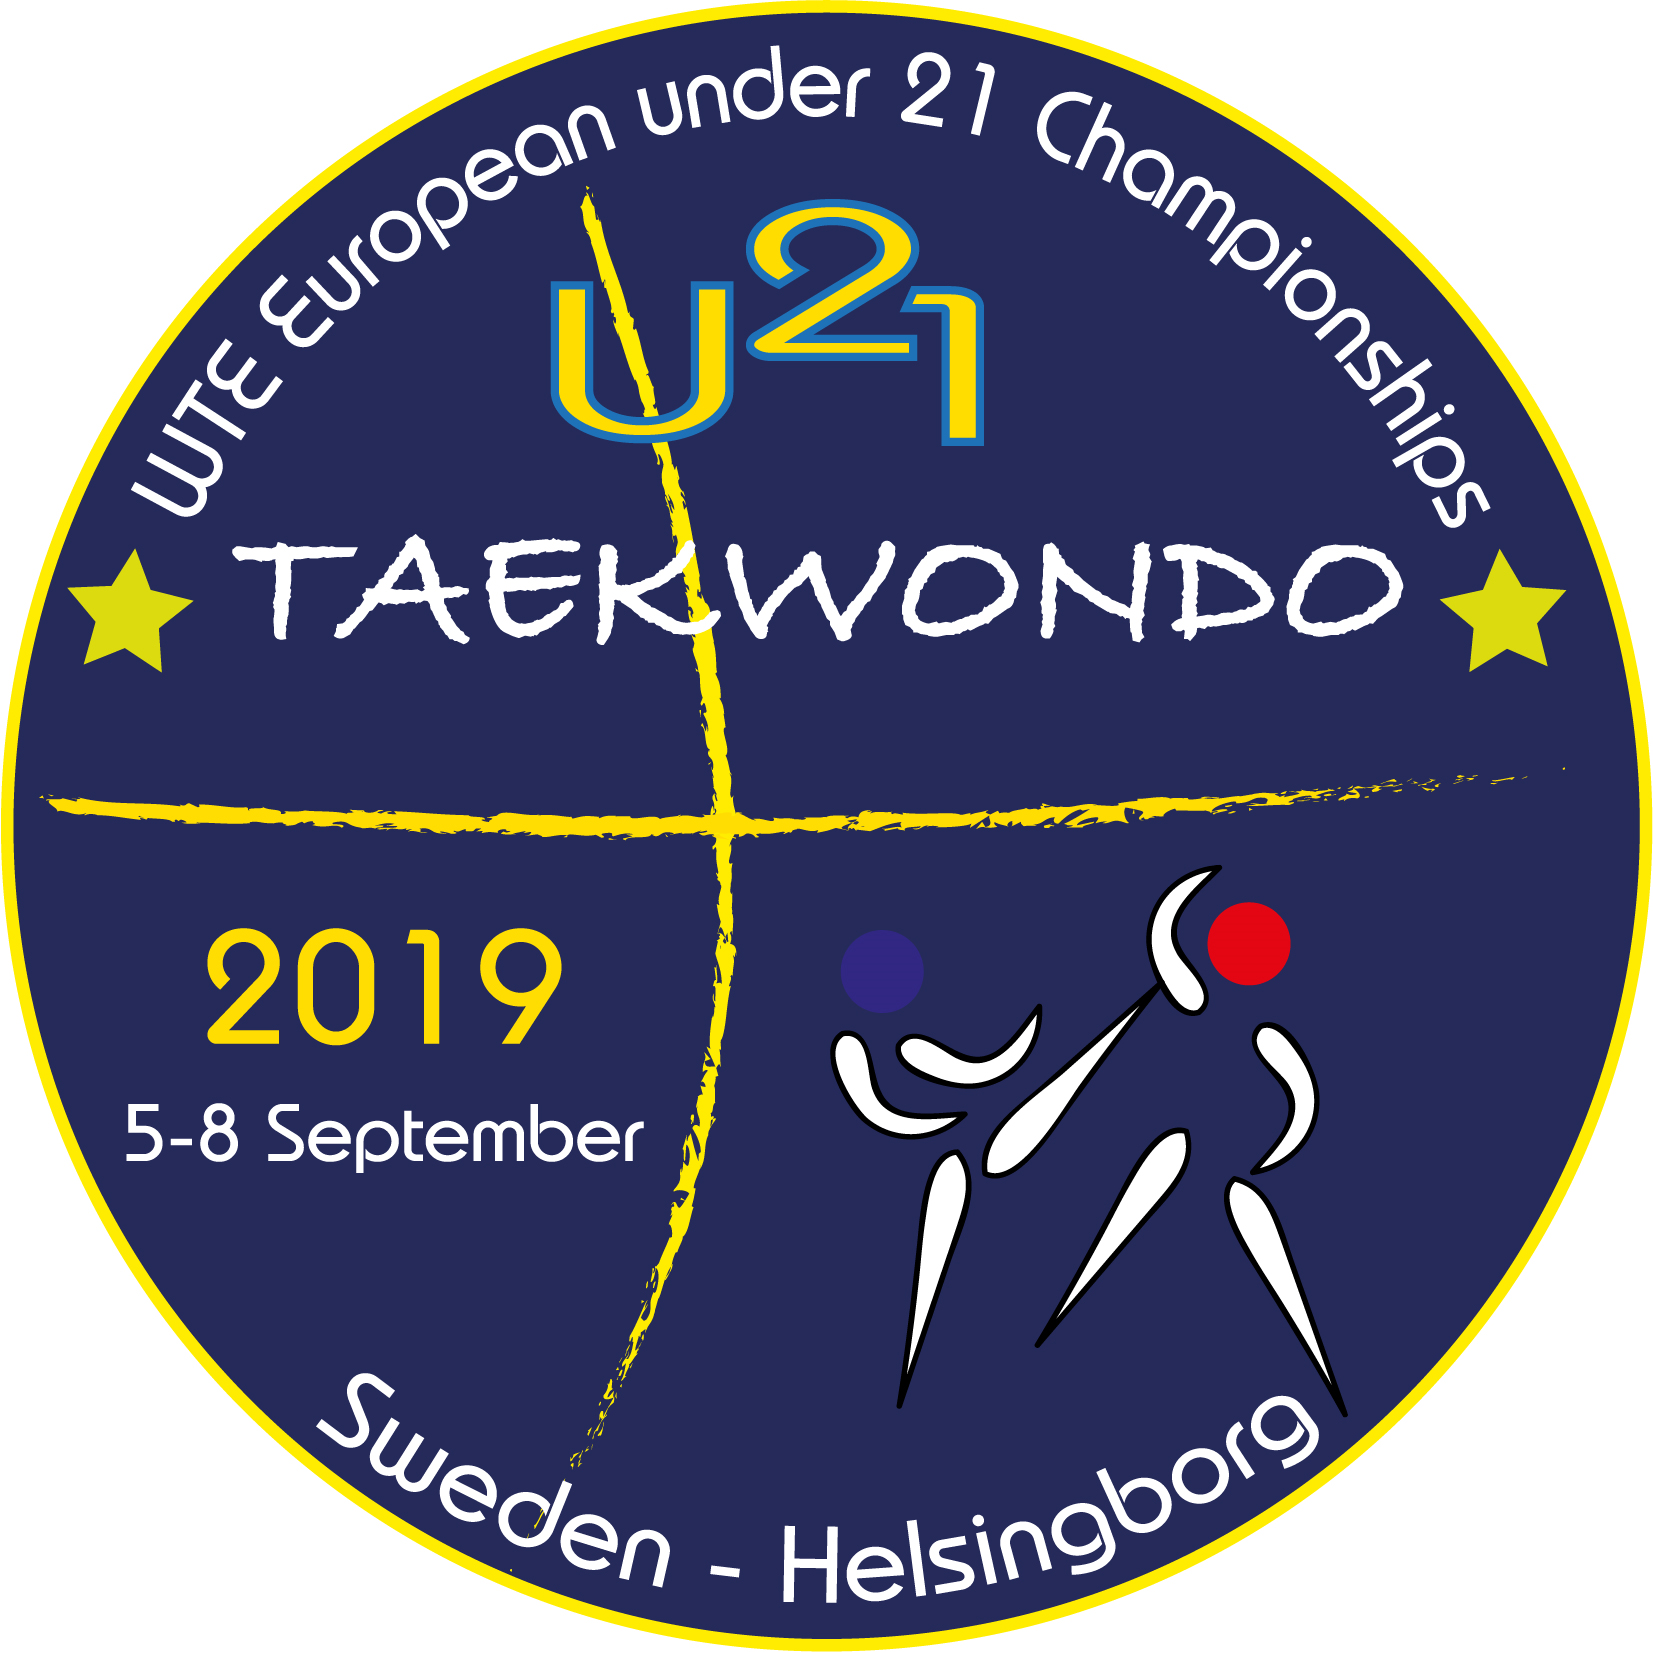 2019 European Taekwondo Under 21 Championships